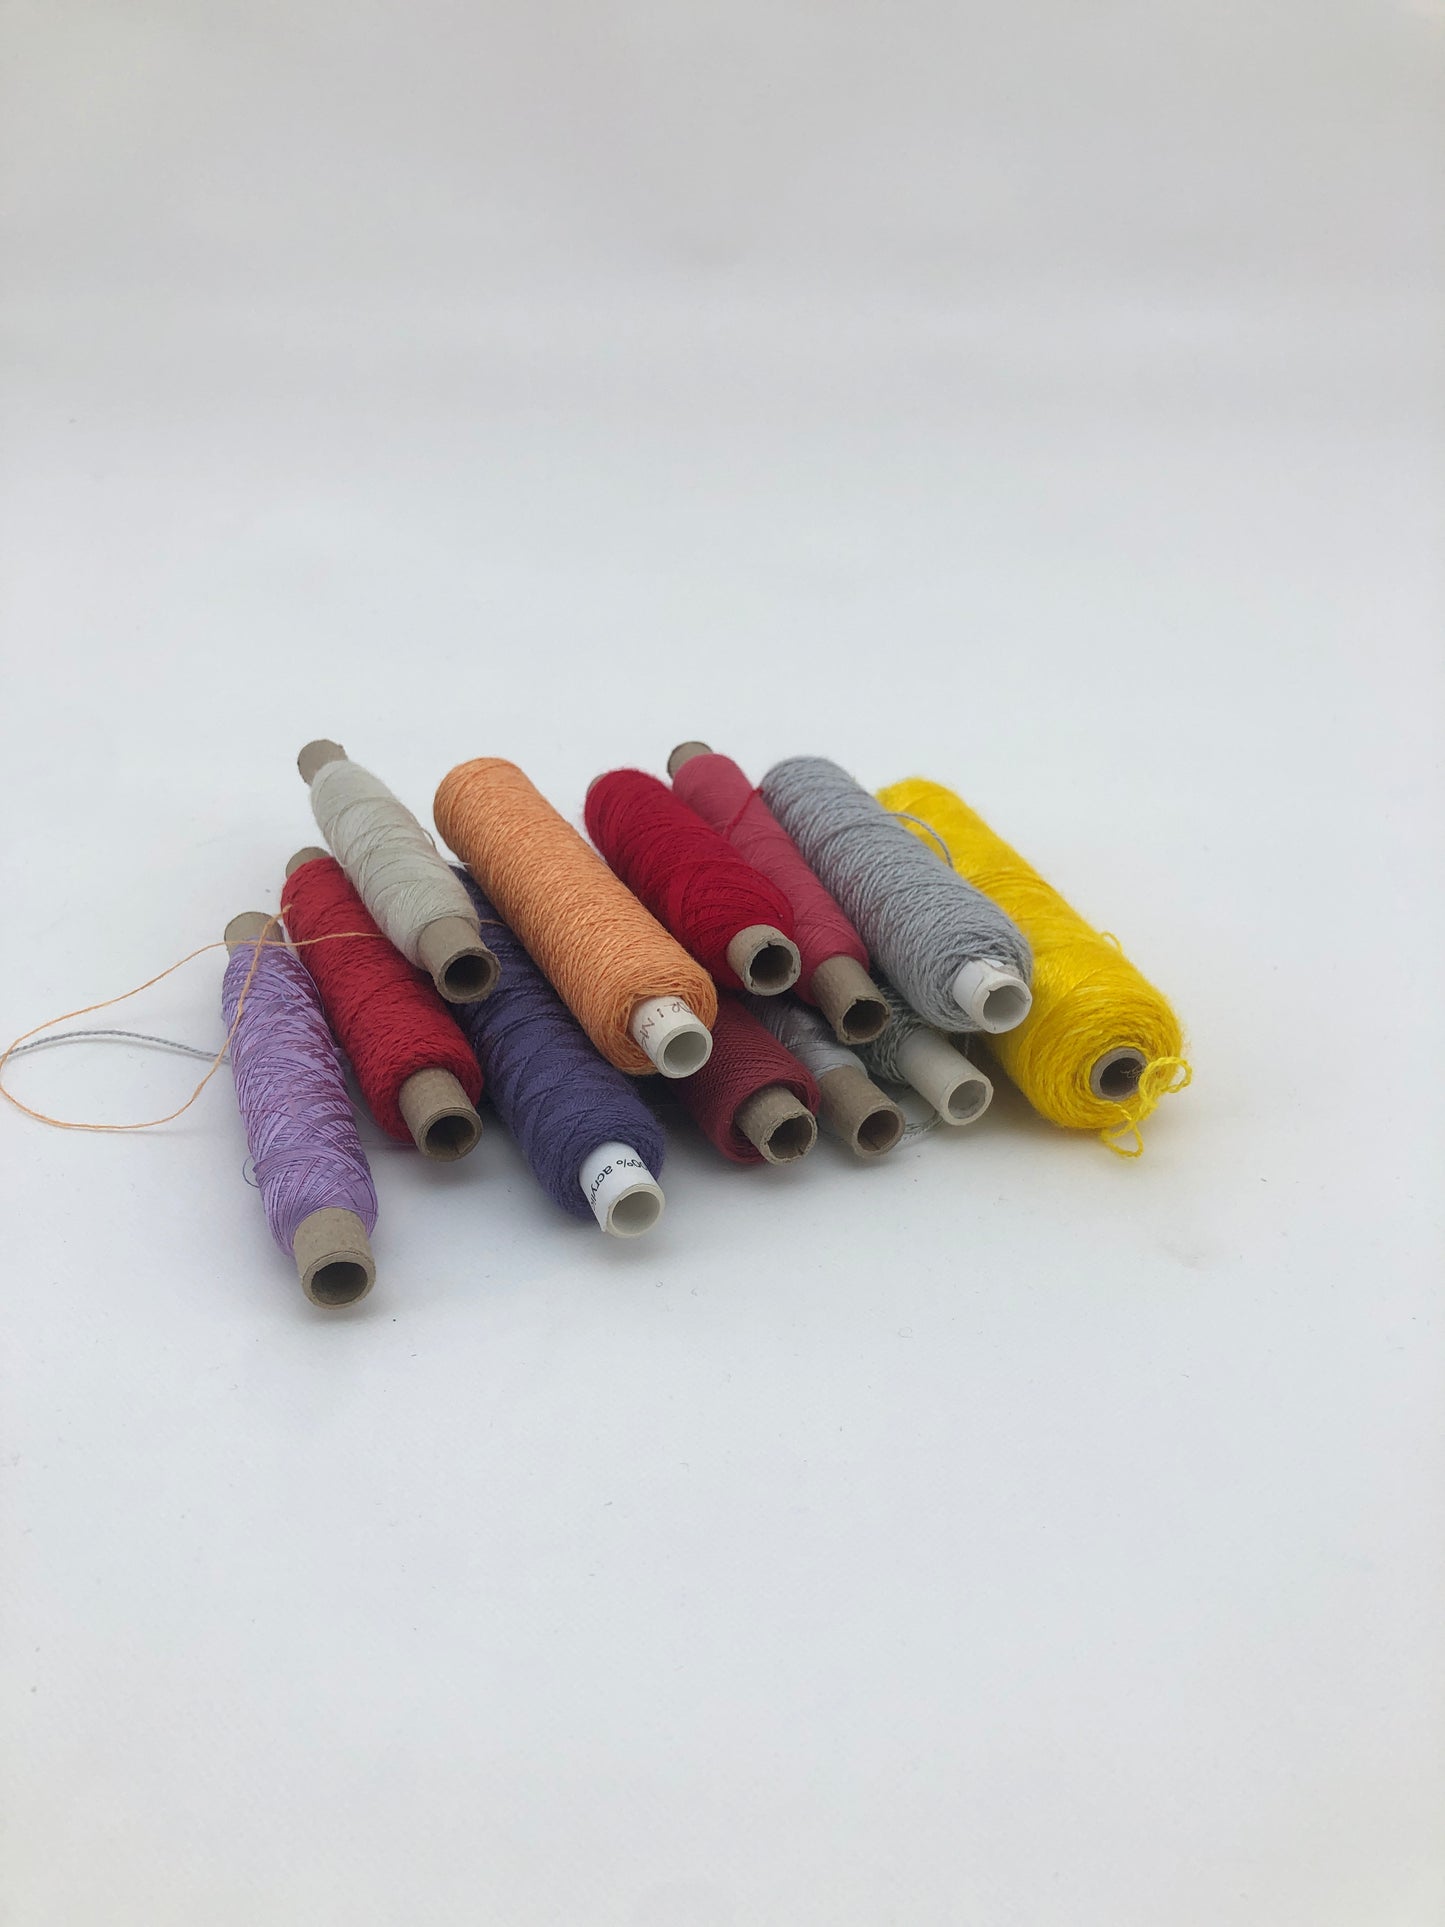 Yarn/ Thread, Mixed Coloured - 60g